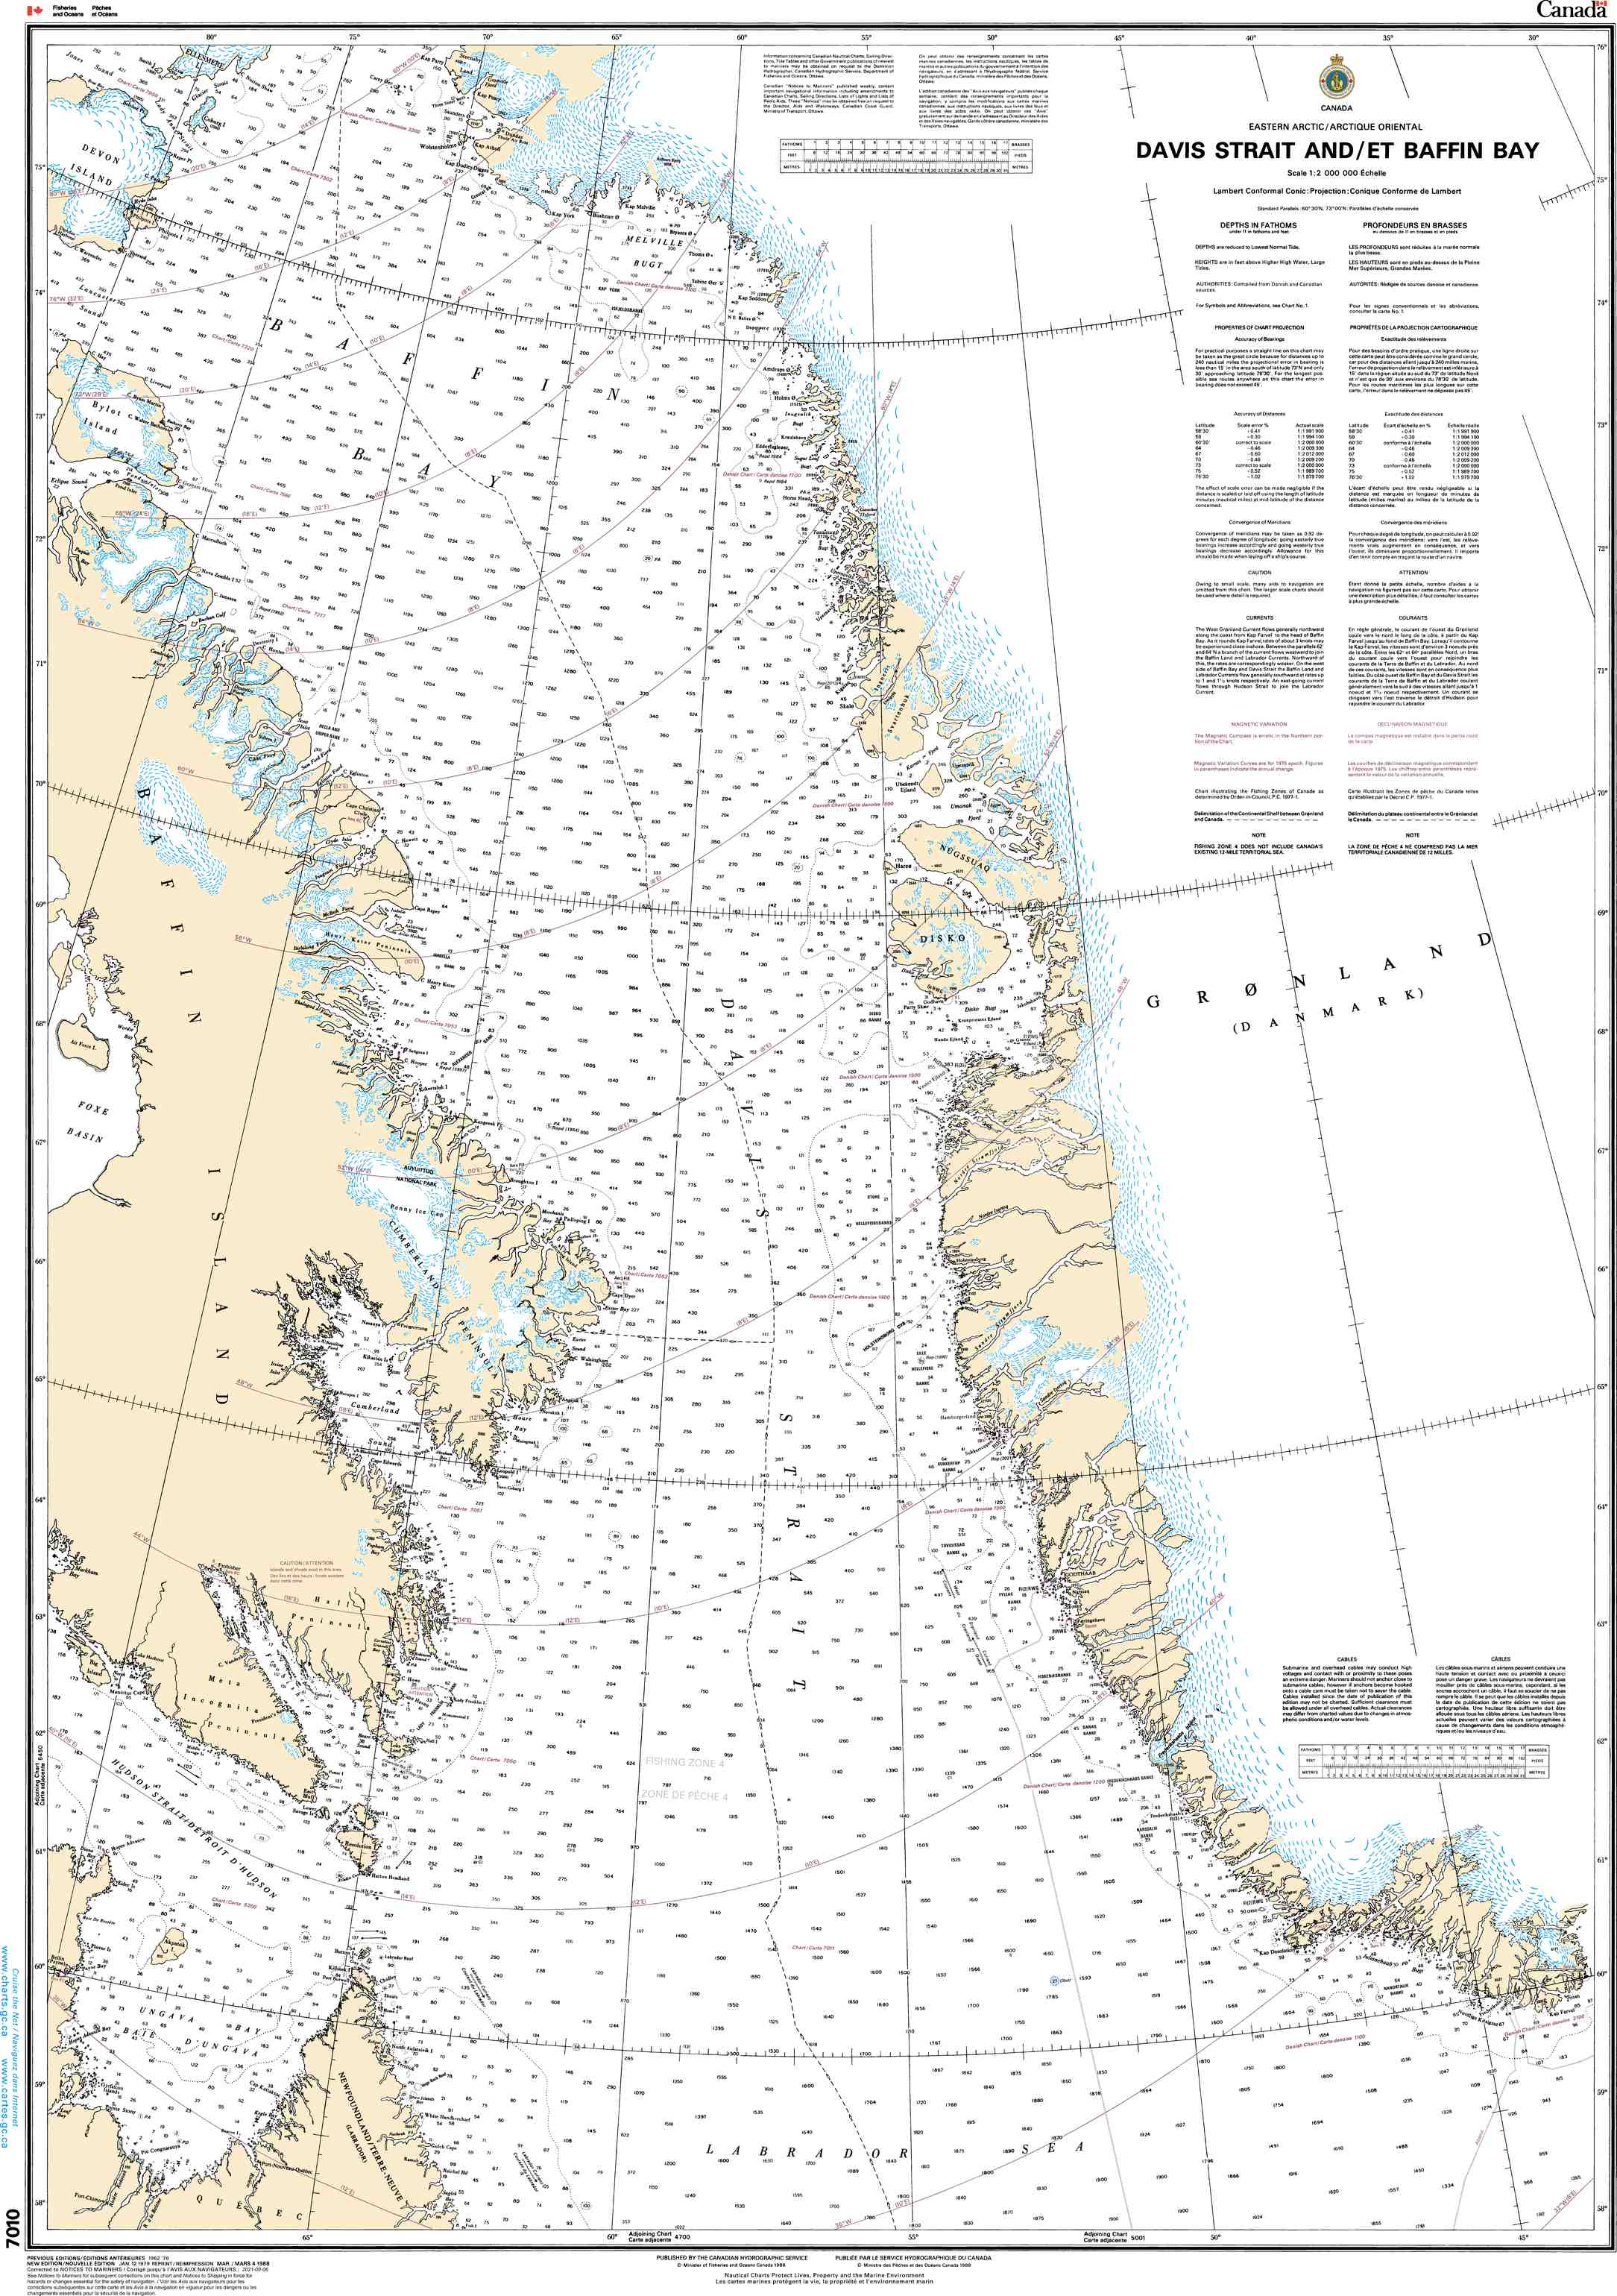 Canadian Hydrographic Service Nautical Chart CHS7010: Davis Strait and/et Baffin Bay